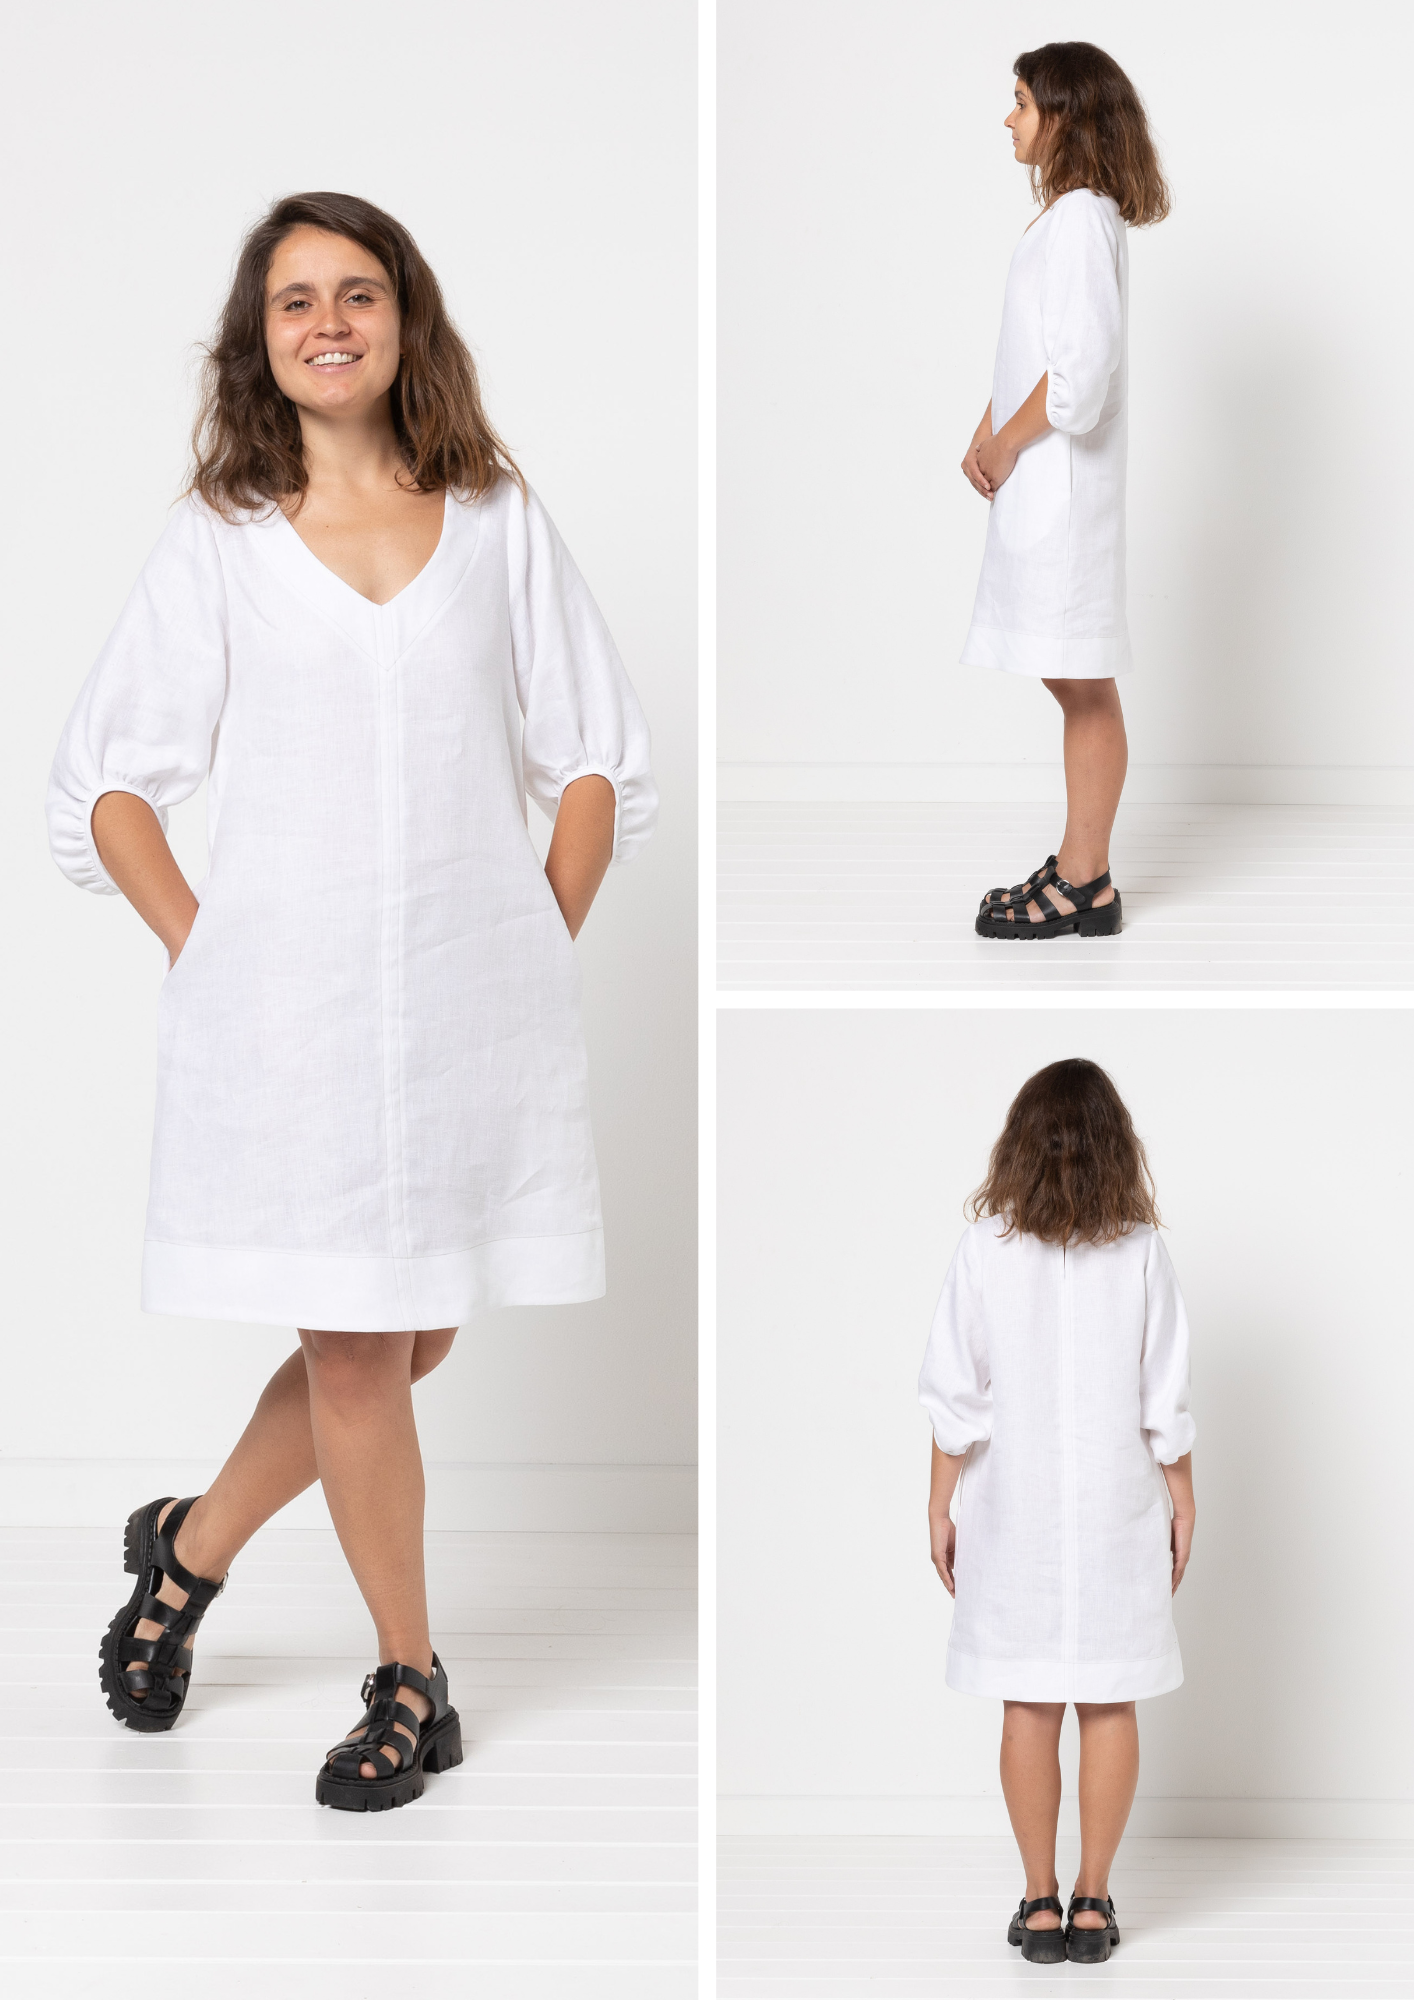 Zalia Woven Top & Dress | New Pattern